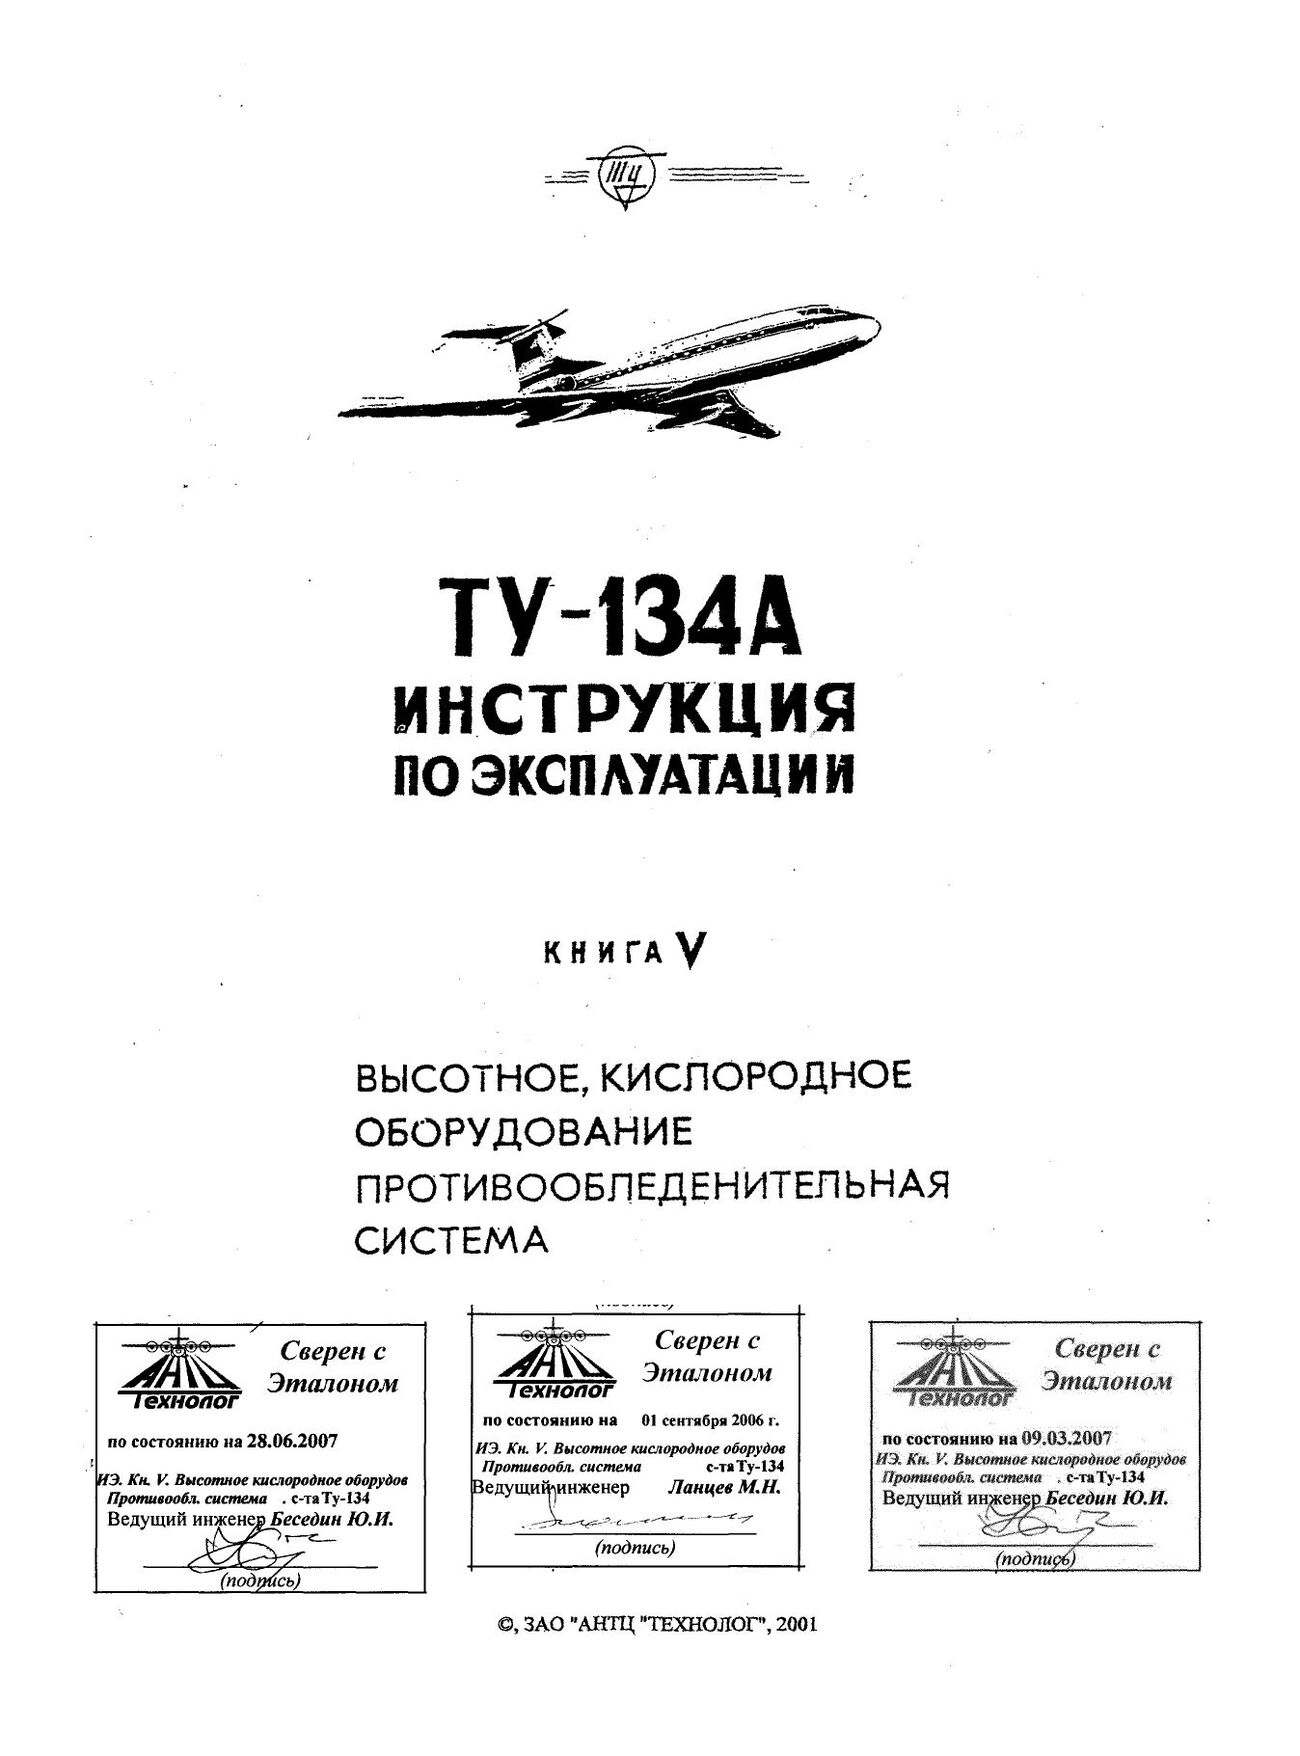 Tu-134_IYE_kn5_002